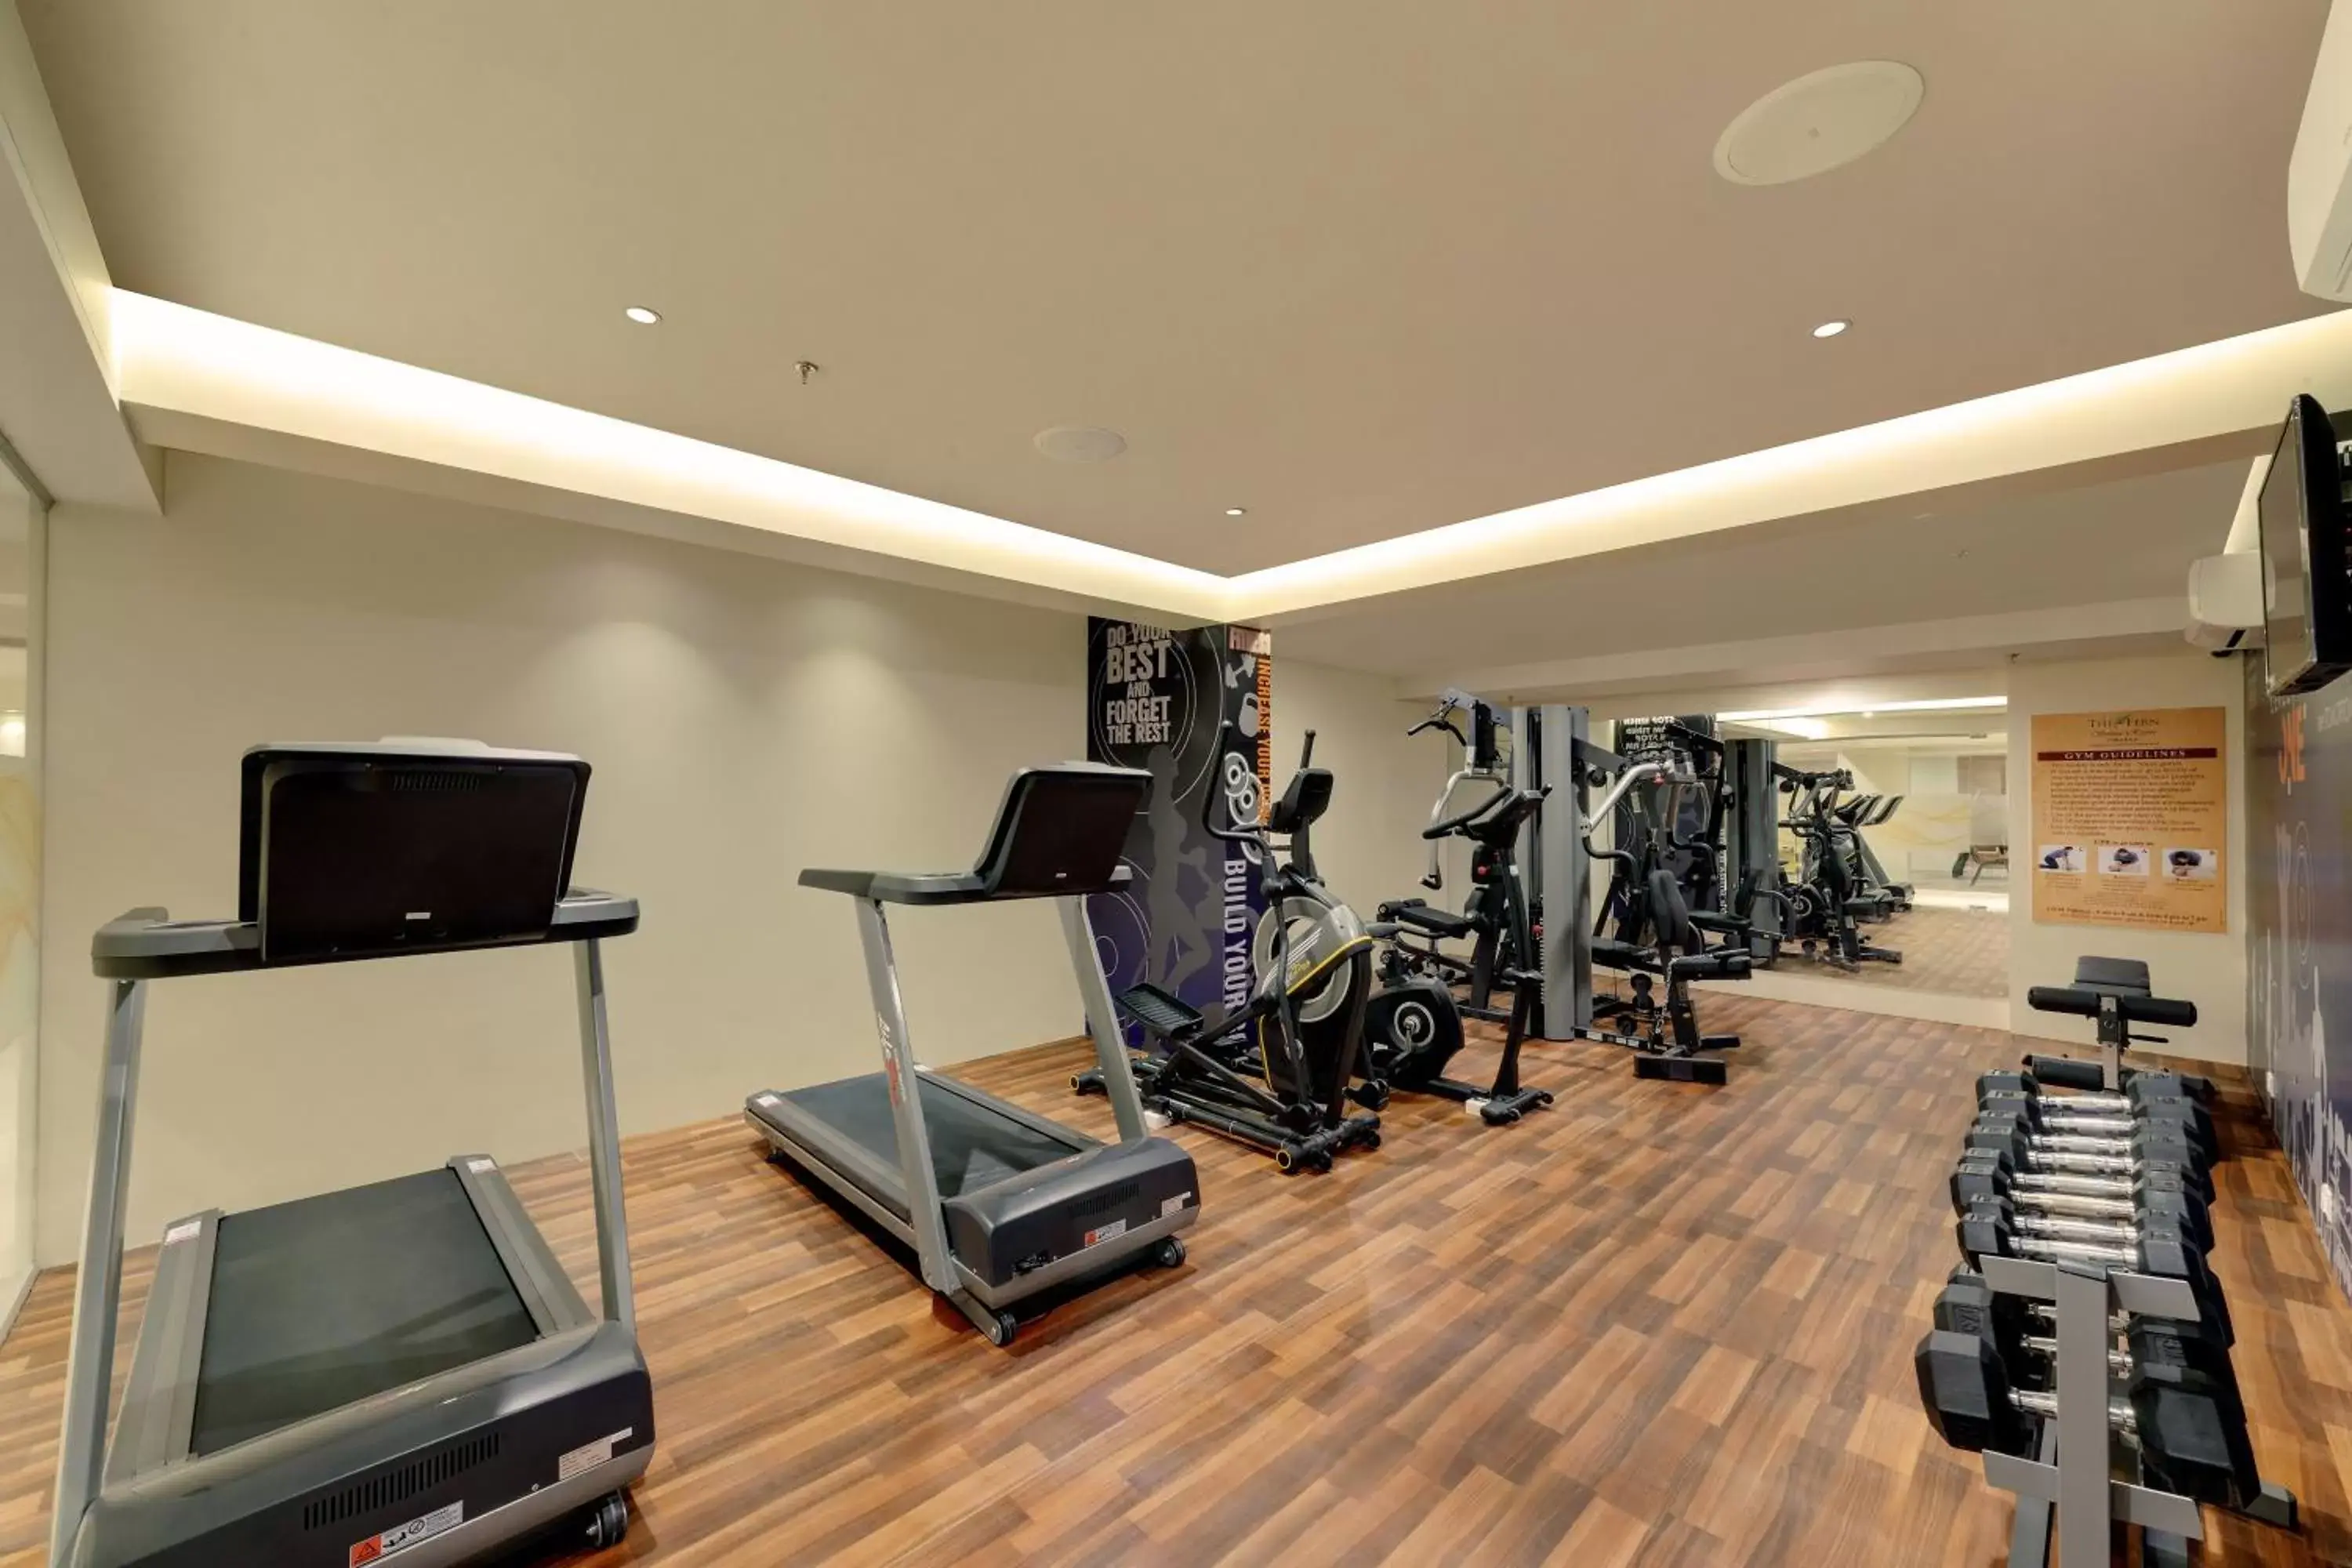 Fitness centre/facilities, Fitness Center/Facilities in The Fern Sattva Resort, Dwarka